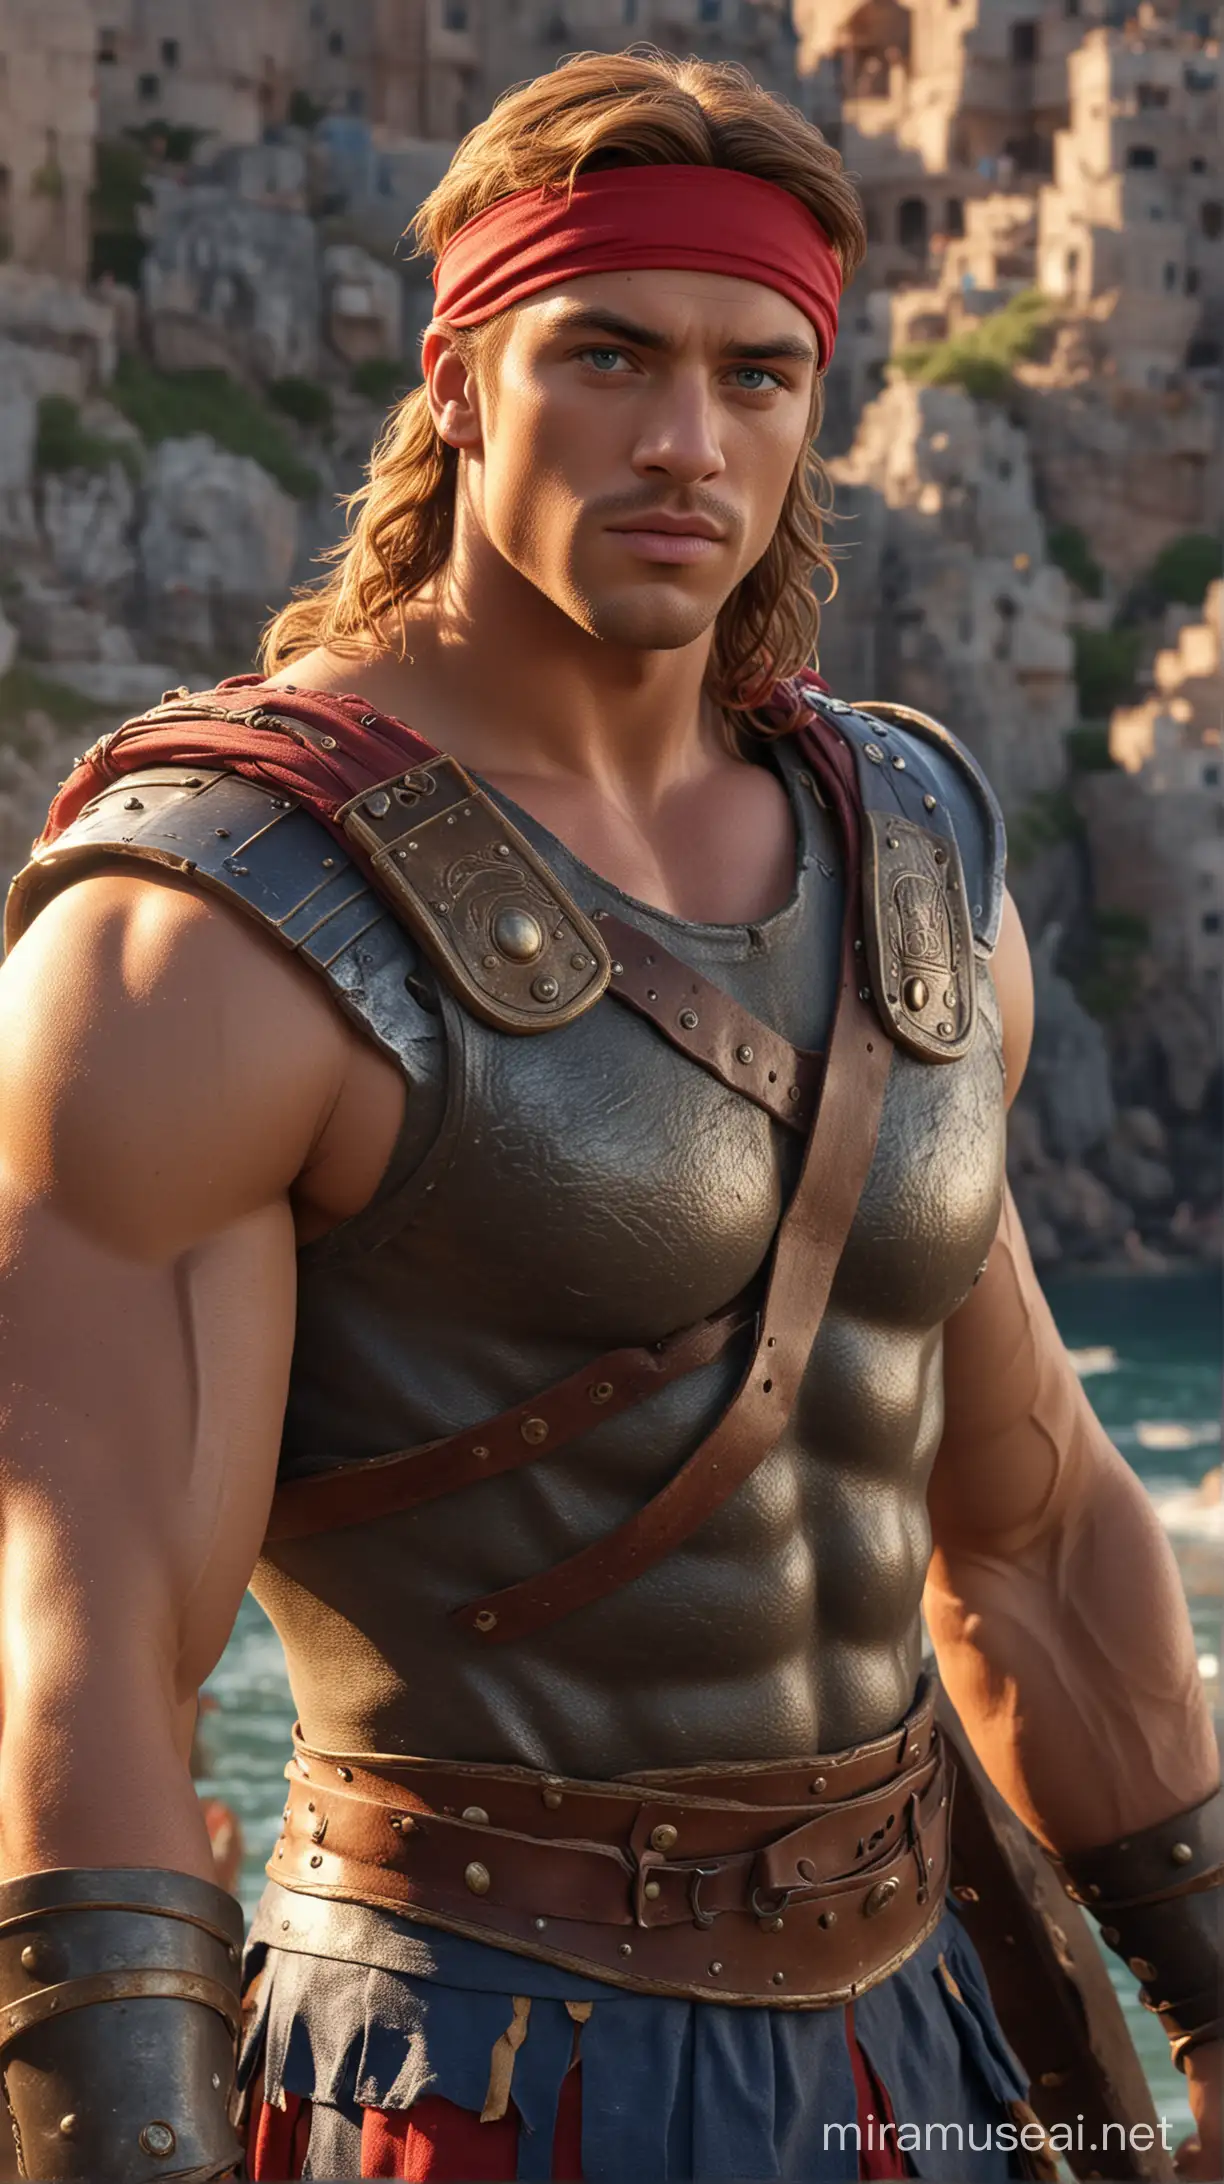 Hercules the Greek Disney Prince in Glorious Roman Gladiator Uniform amidst Natural Sea Setting